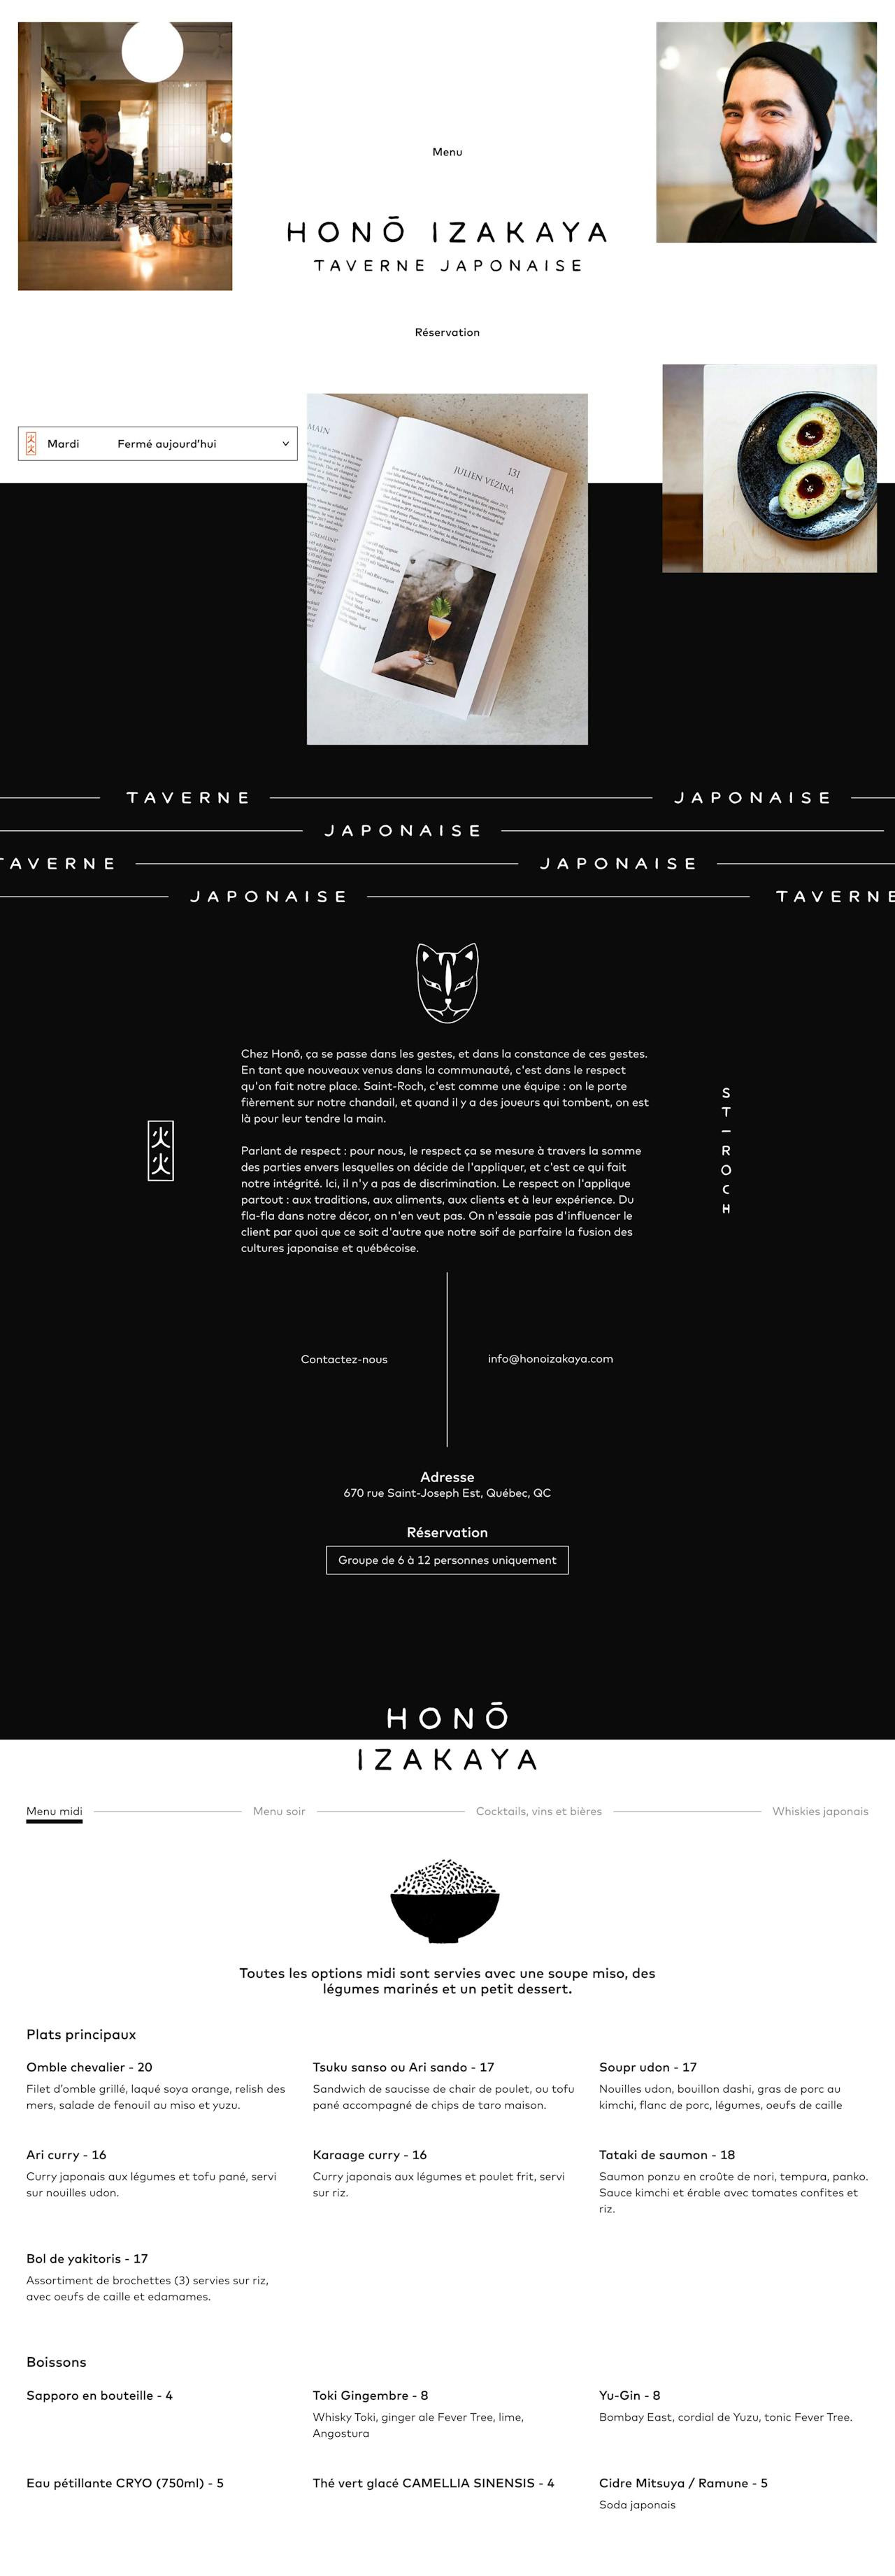 Website Inspiration: Hono Izakaya Website Screenshot